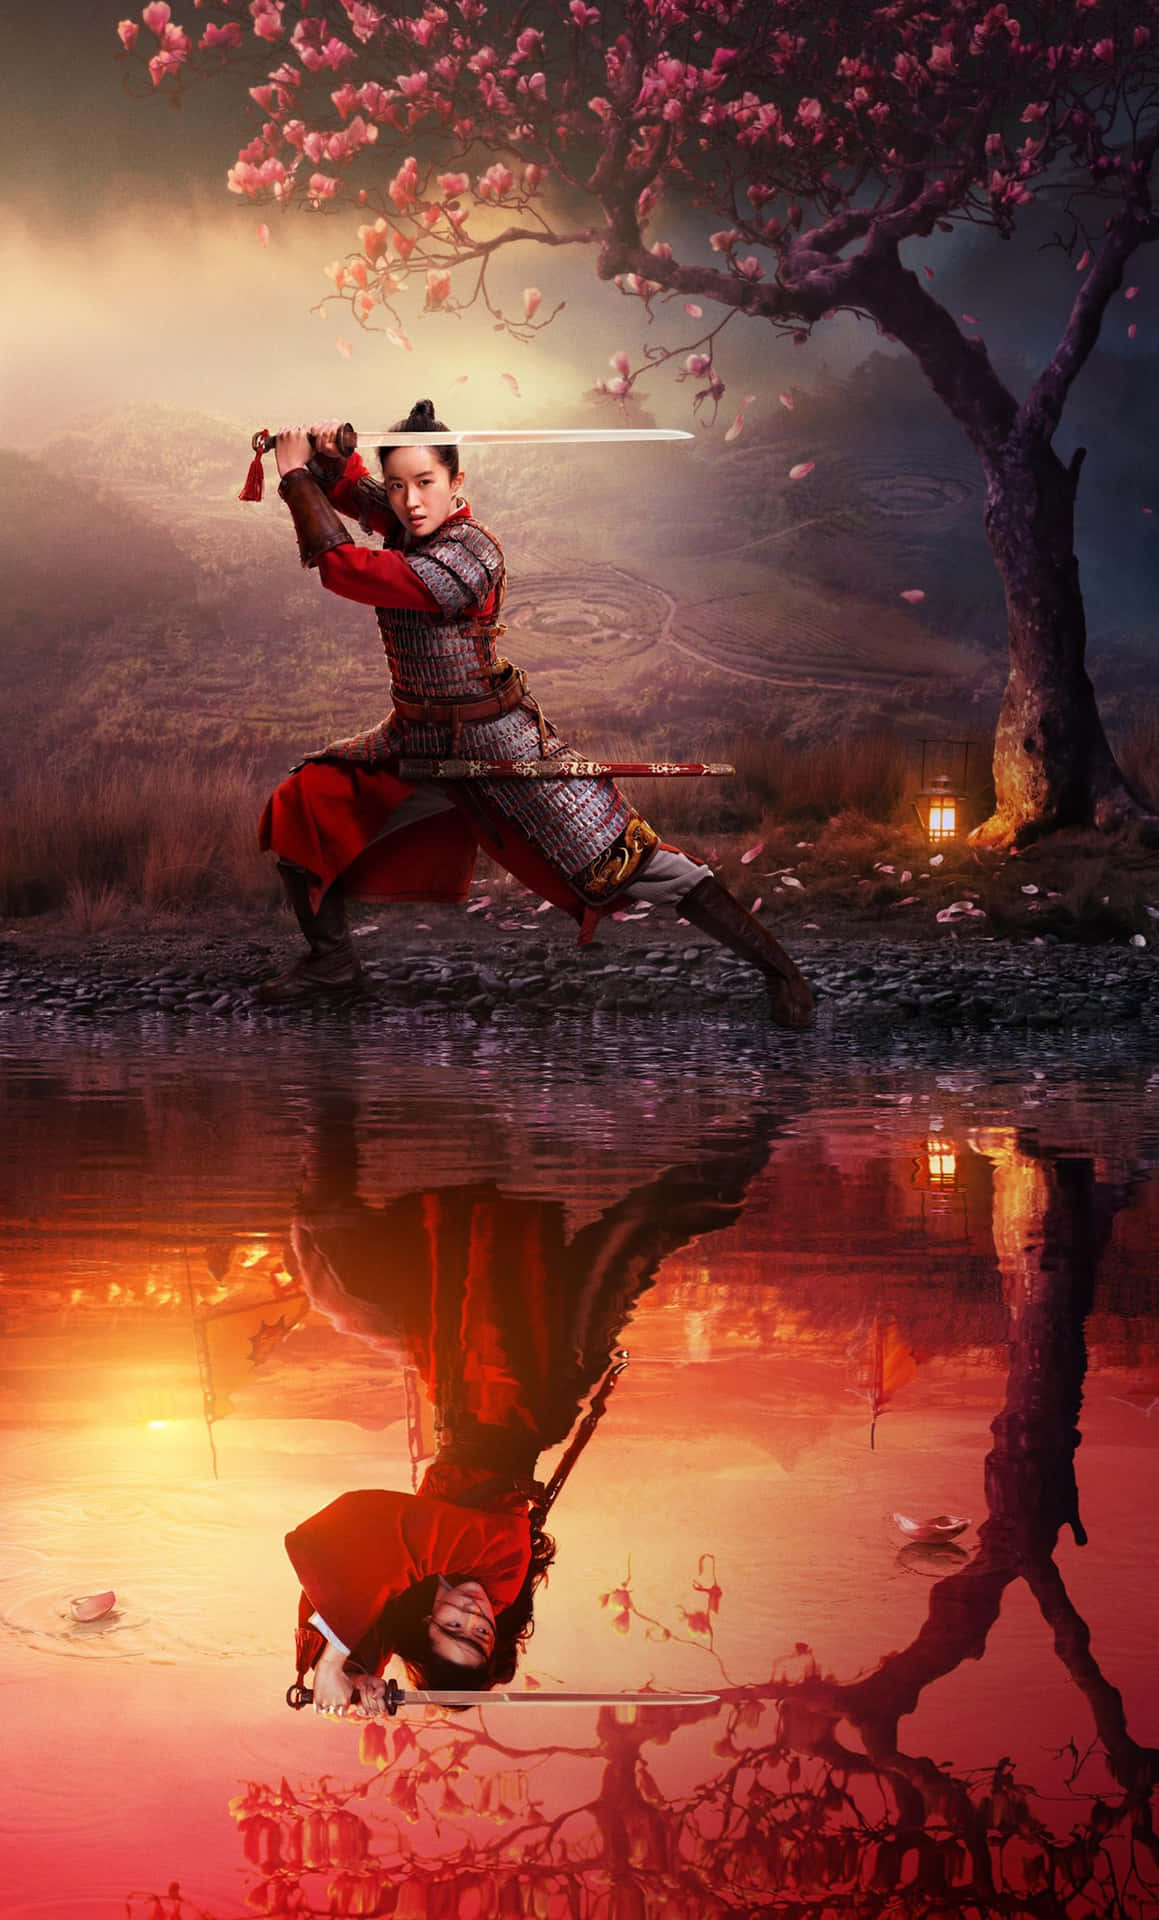 A Brave Warrior, Mulan In Action